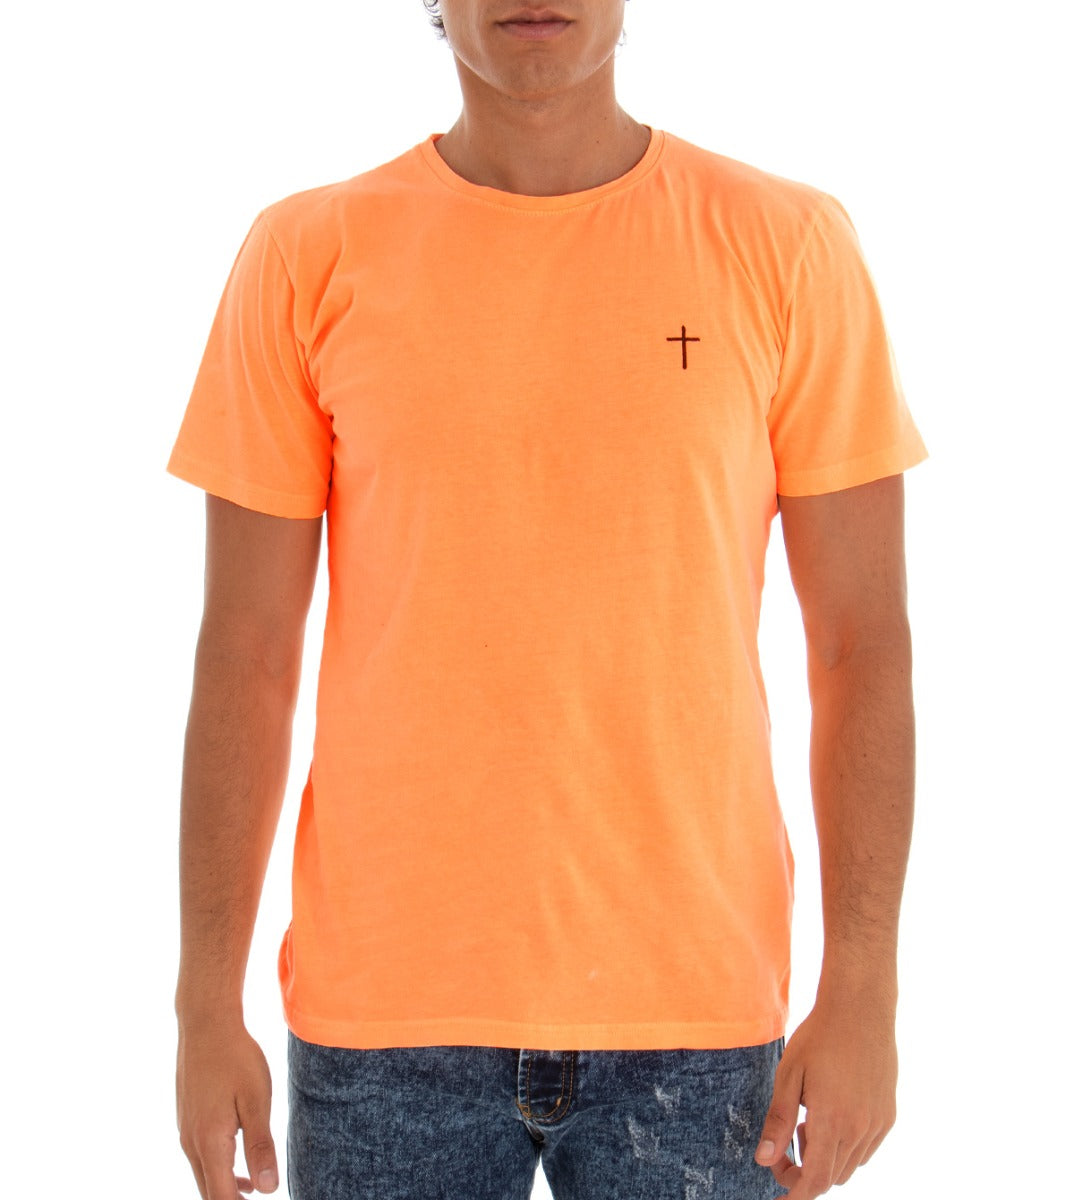 Men's T-shirt Short Sleeves Cotton Solid Color Fluo Orange Crewneck GIOSAL